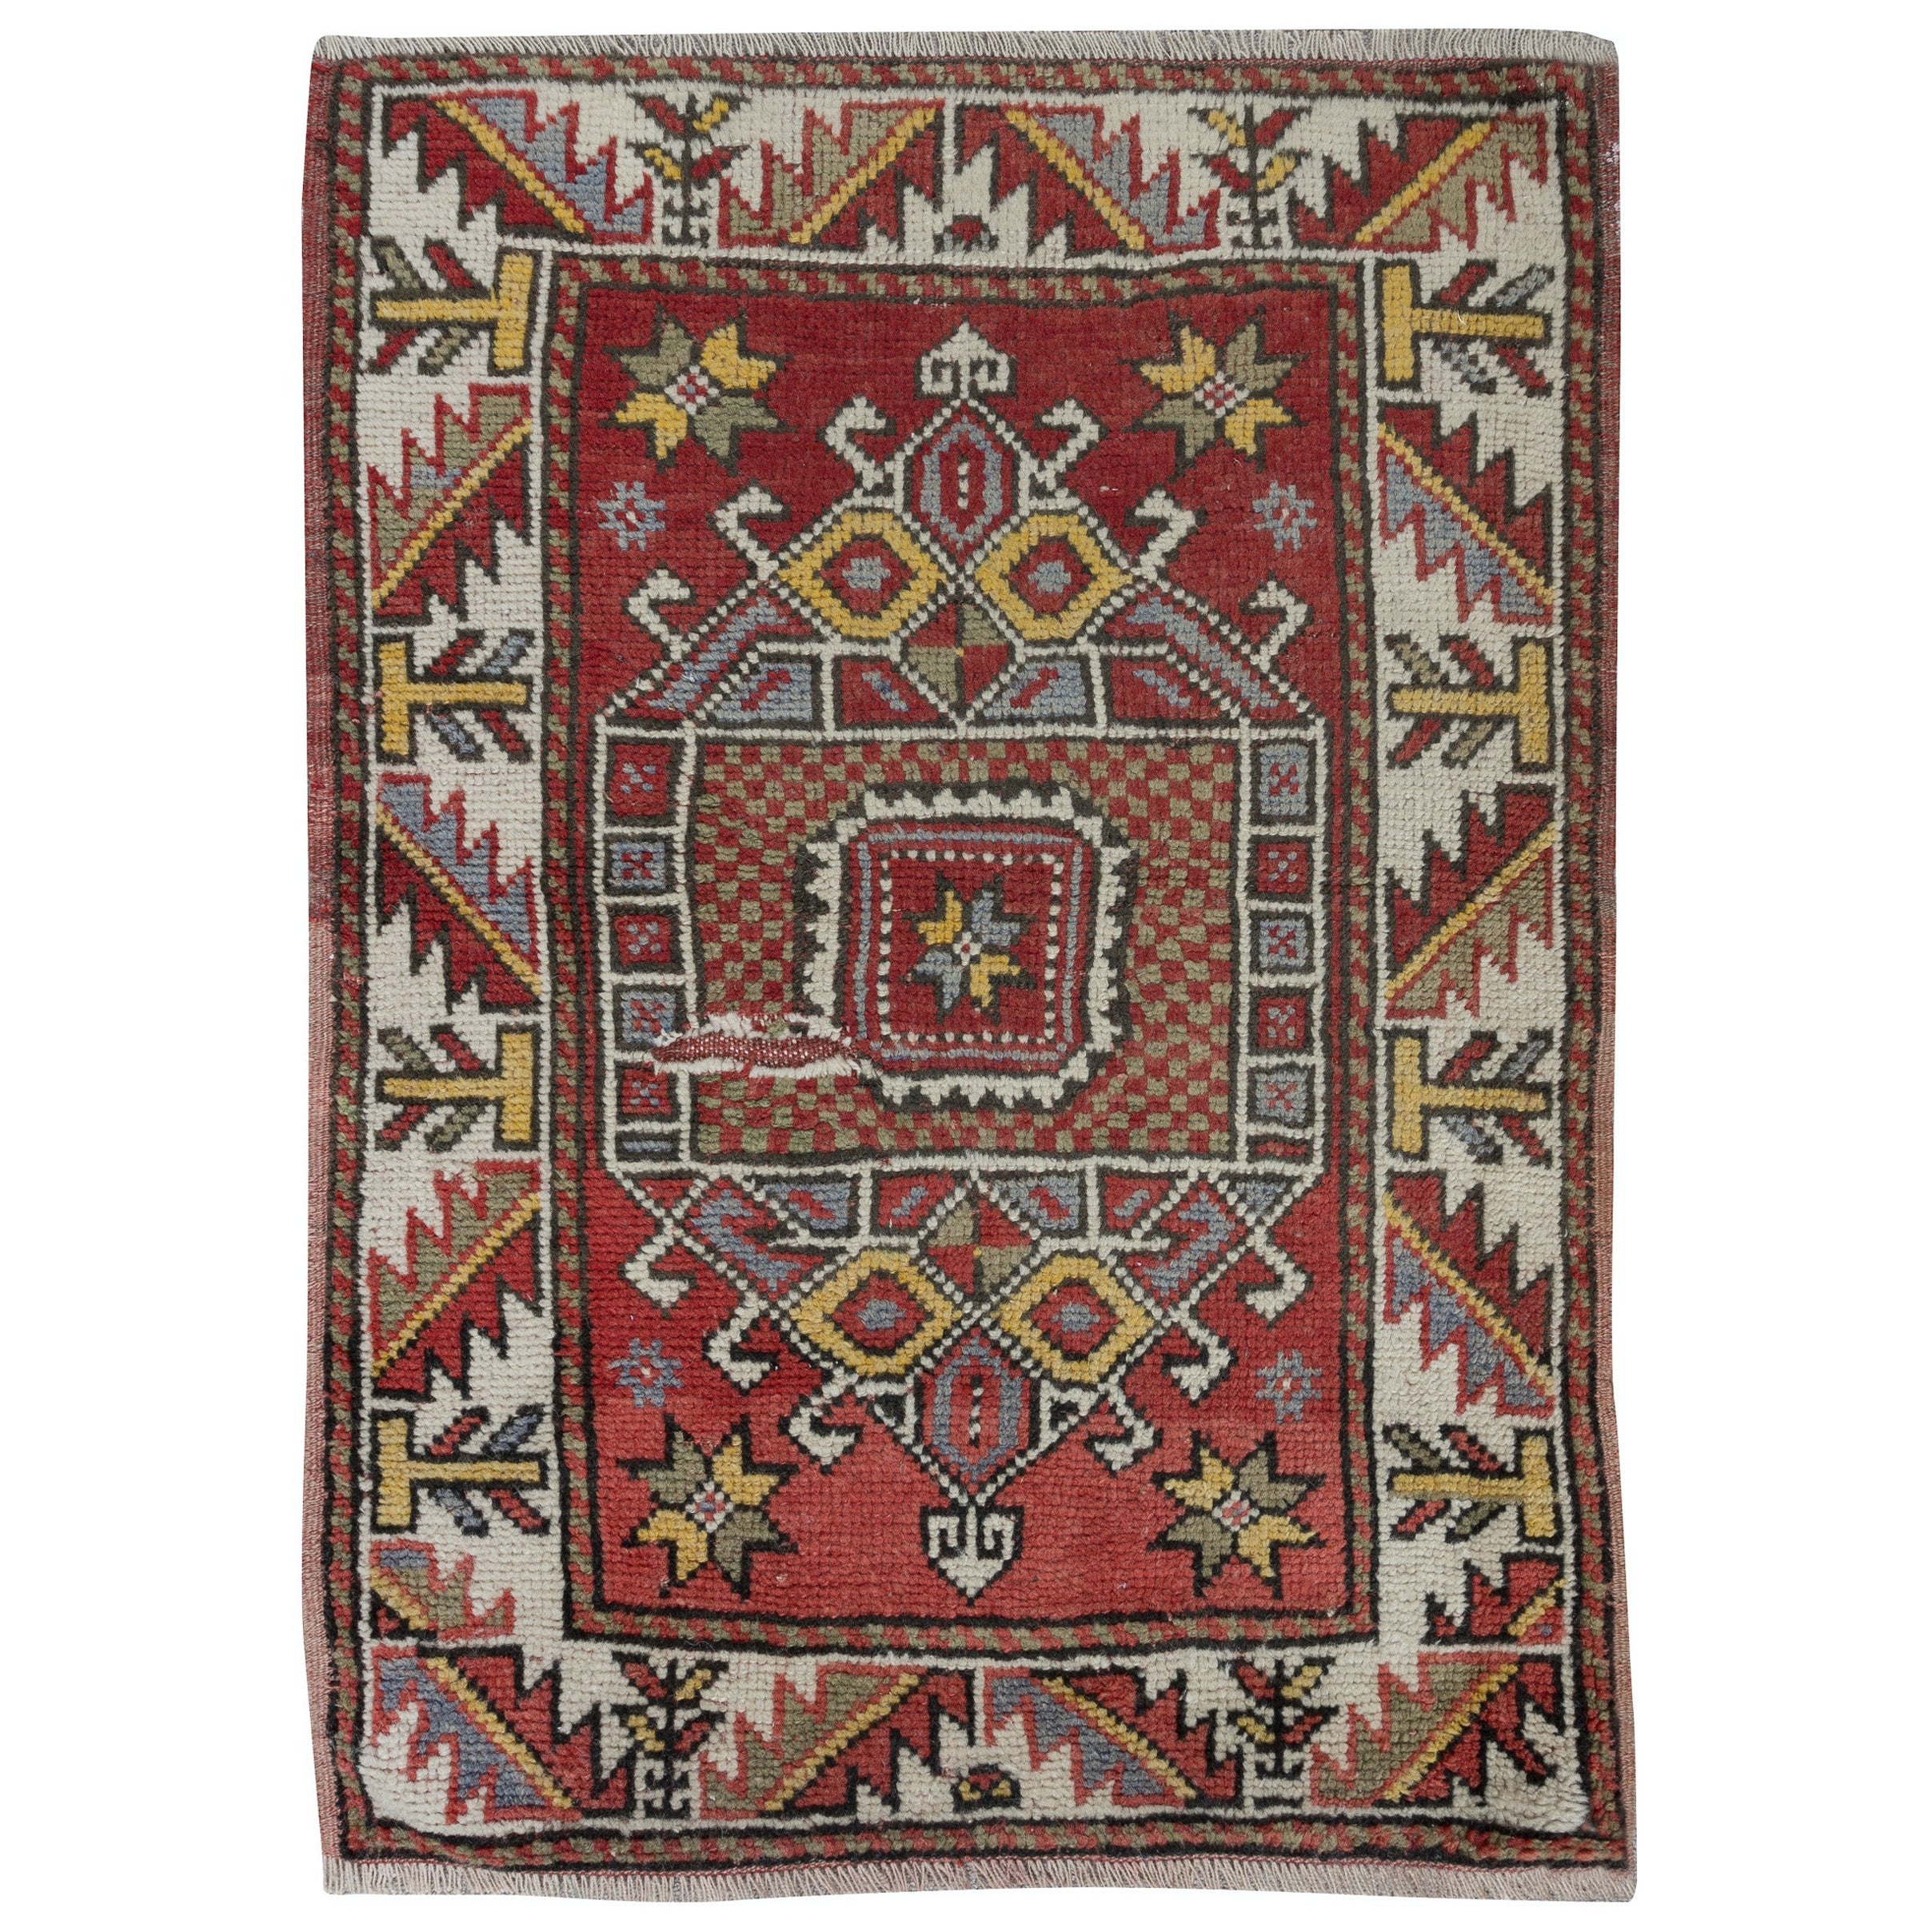 2.4x3.2 Ft Handmade Geometric Medallion Design Rug, Vintage Turkish Red Carpet For Sale